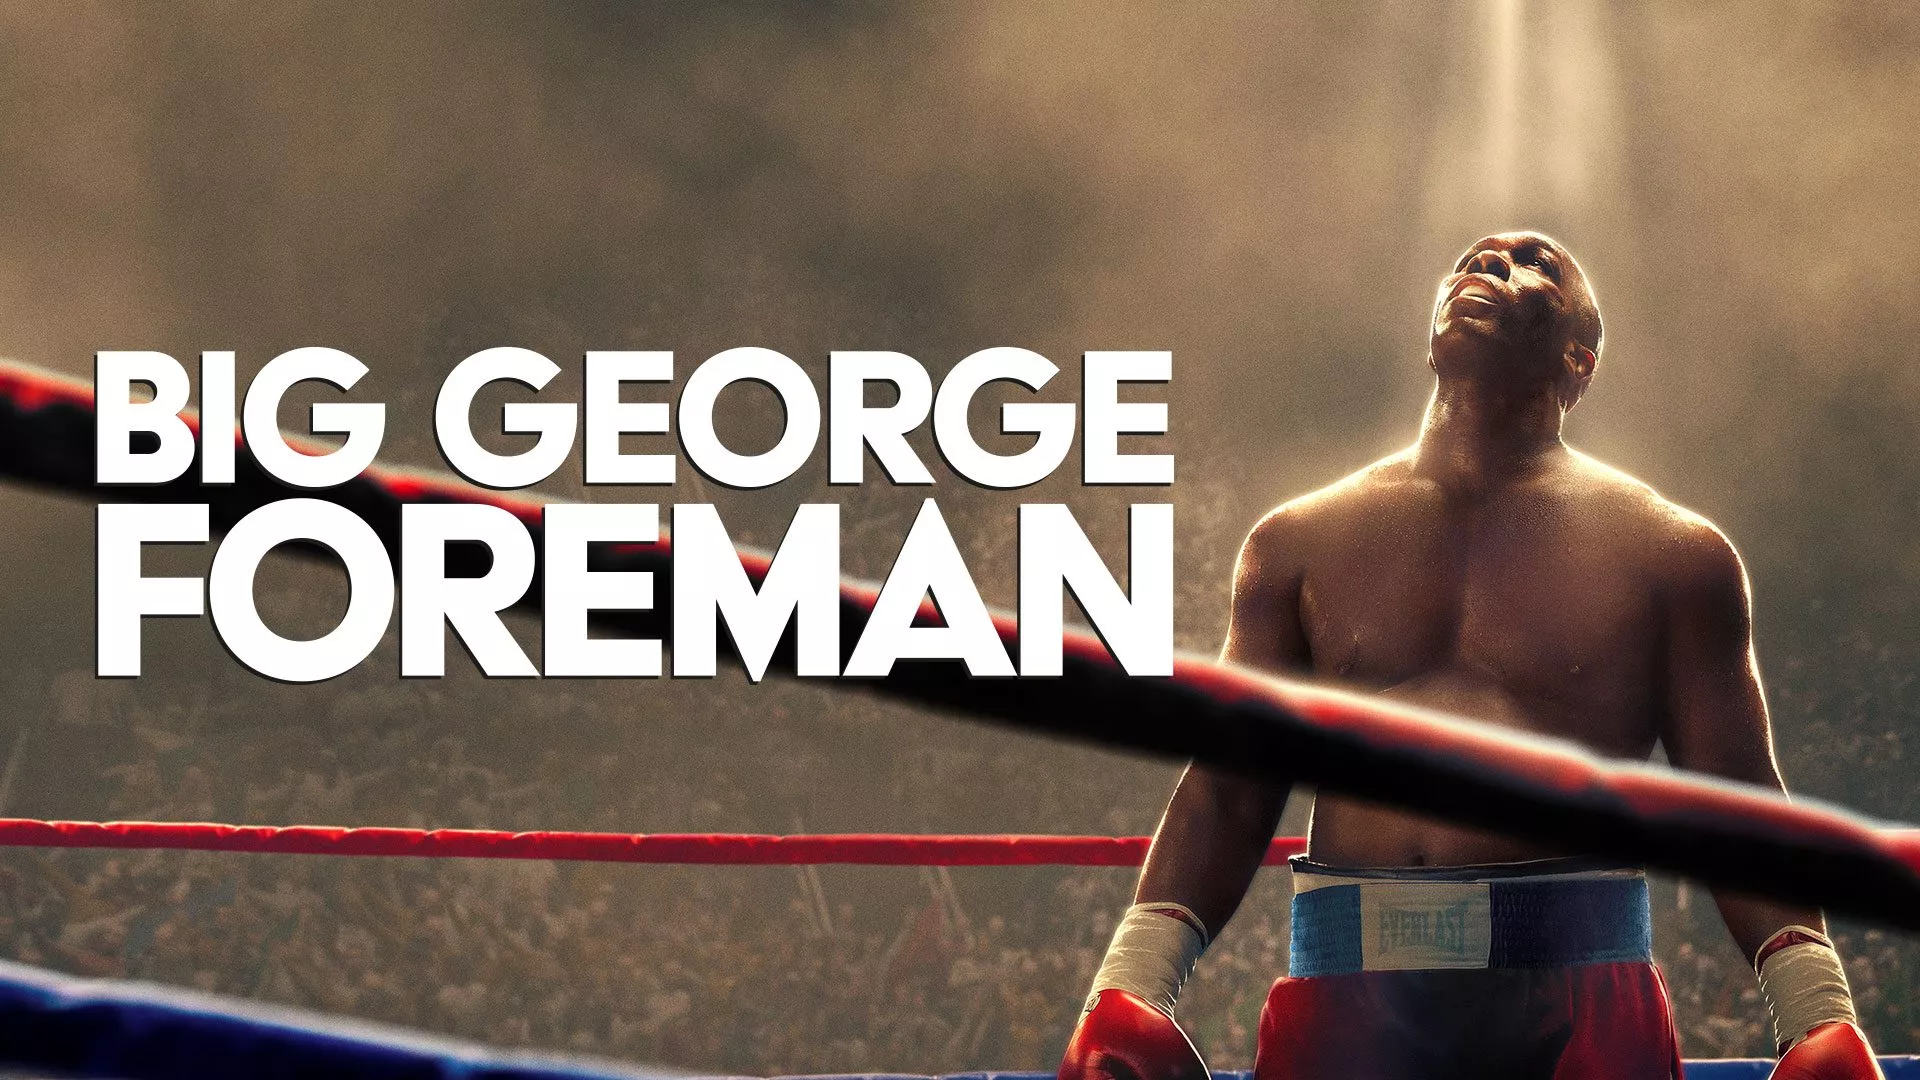 BIG GEORGE FOREMAN – Official Trailer (HD)